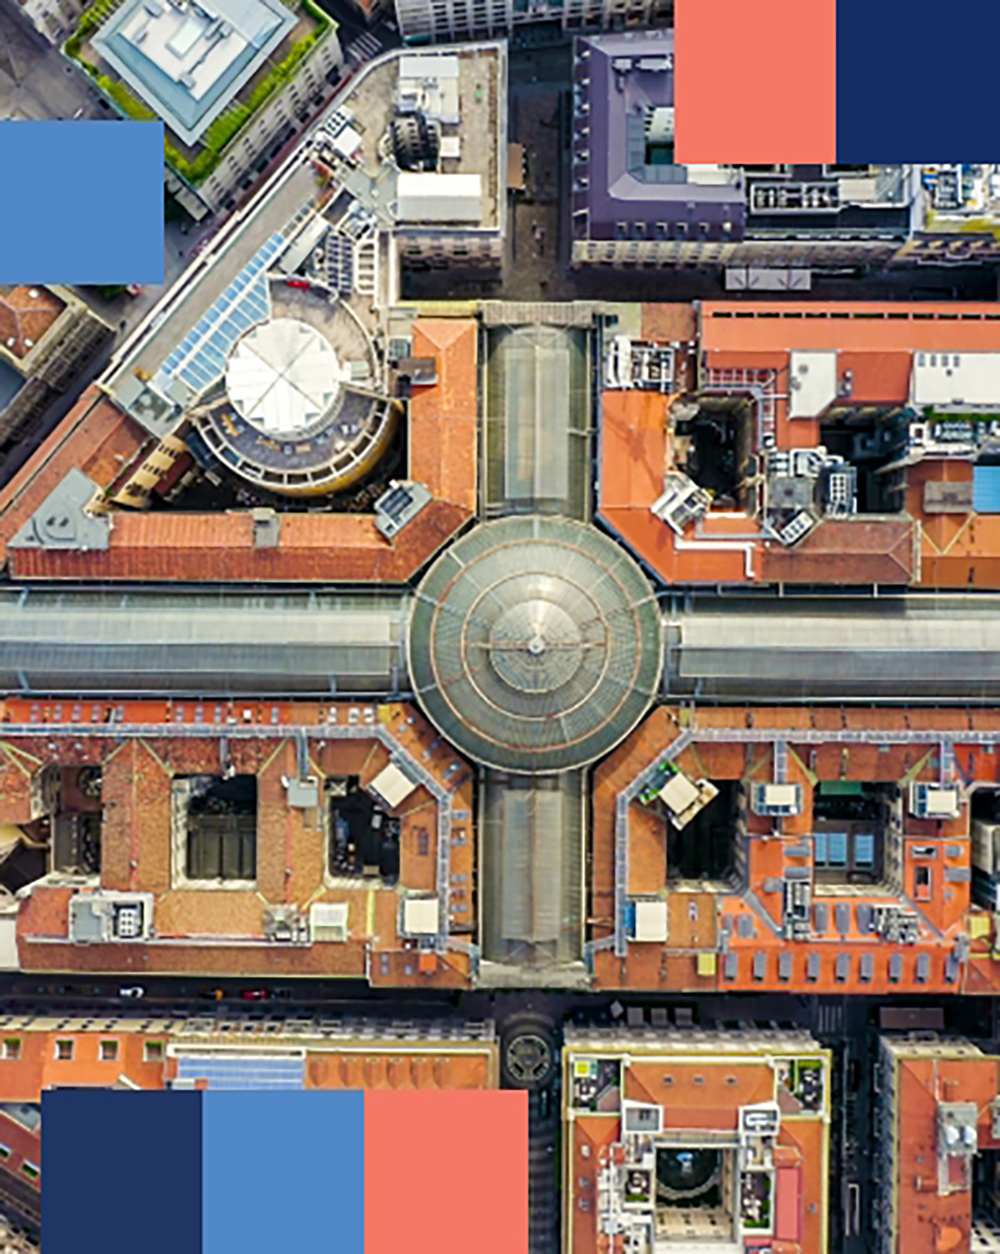 Galleria Vittorio Emanuele II in Mailand von oben - mobile